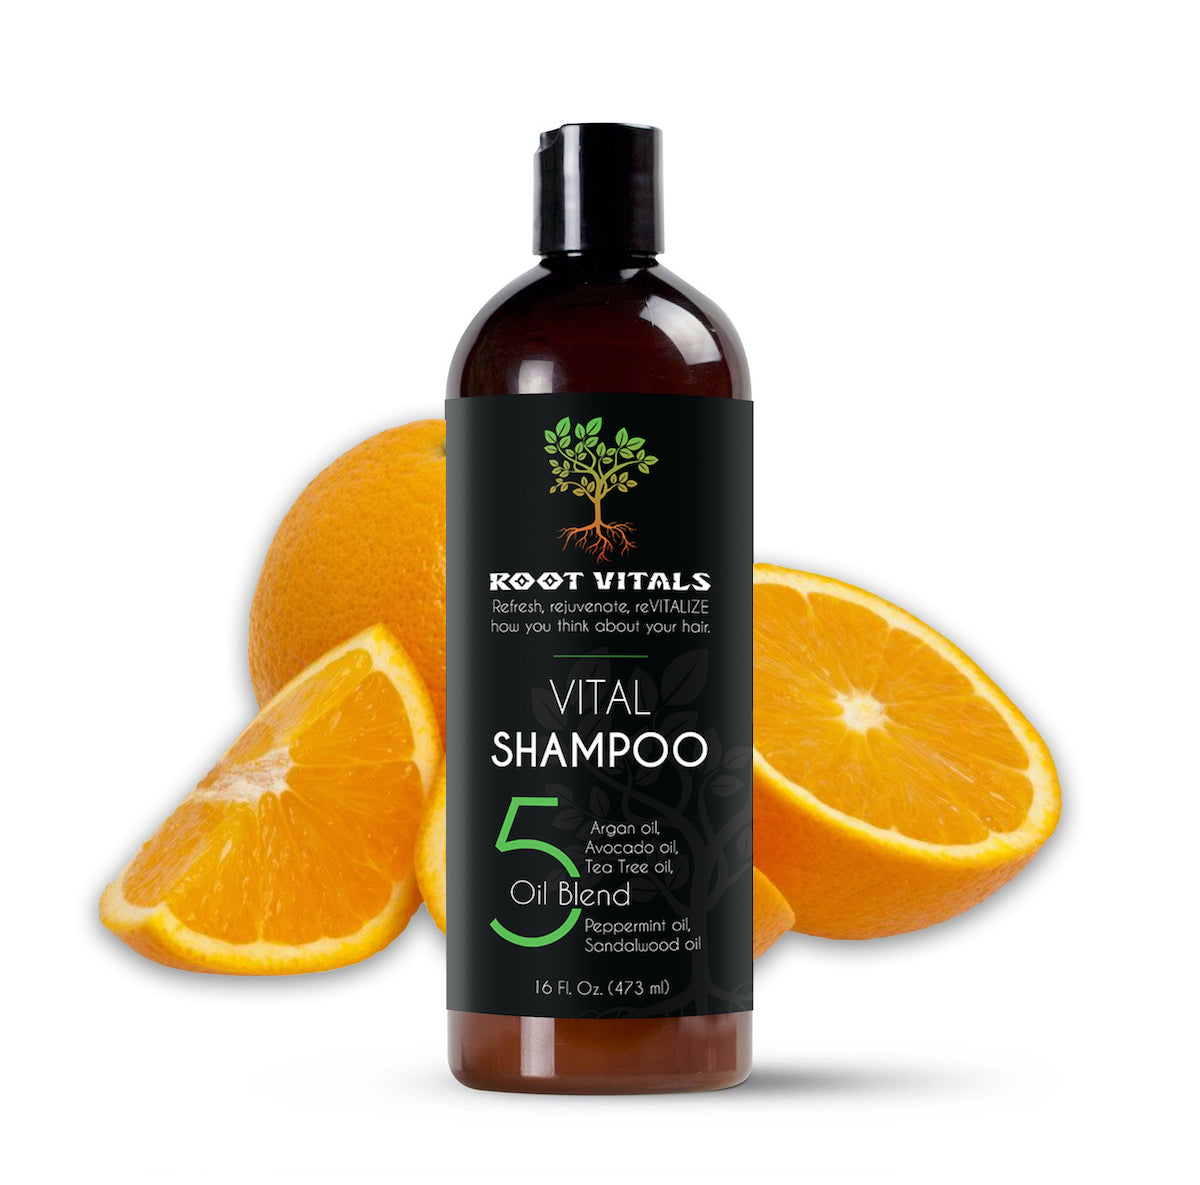 Orange scented natural hair growth shampoo